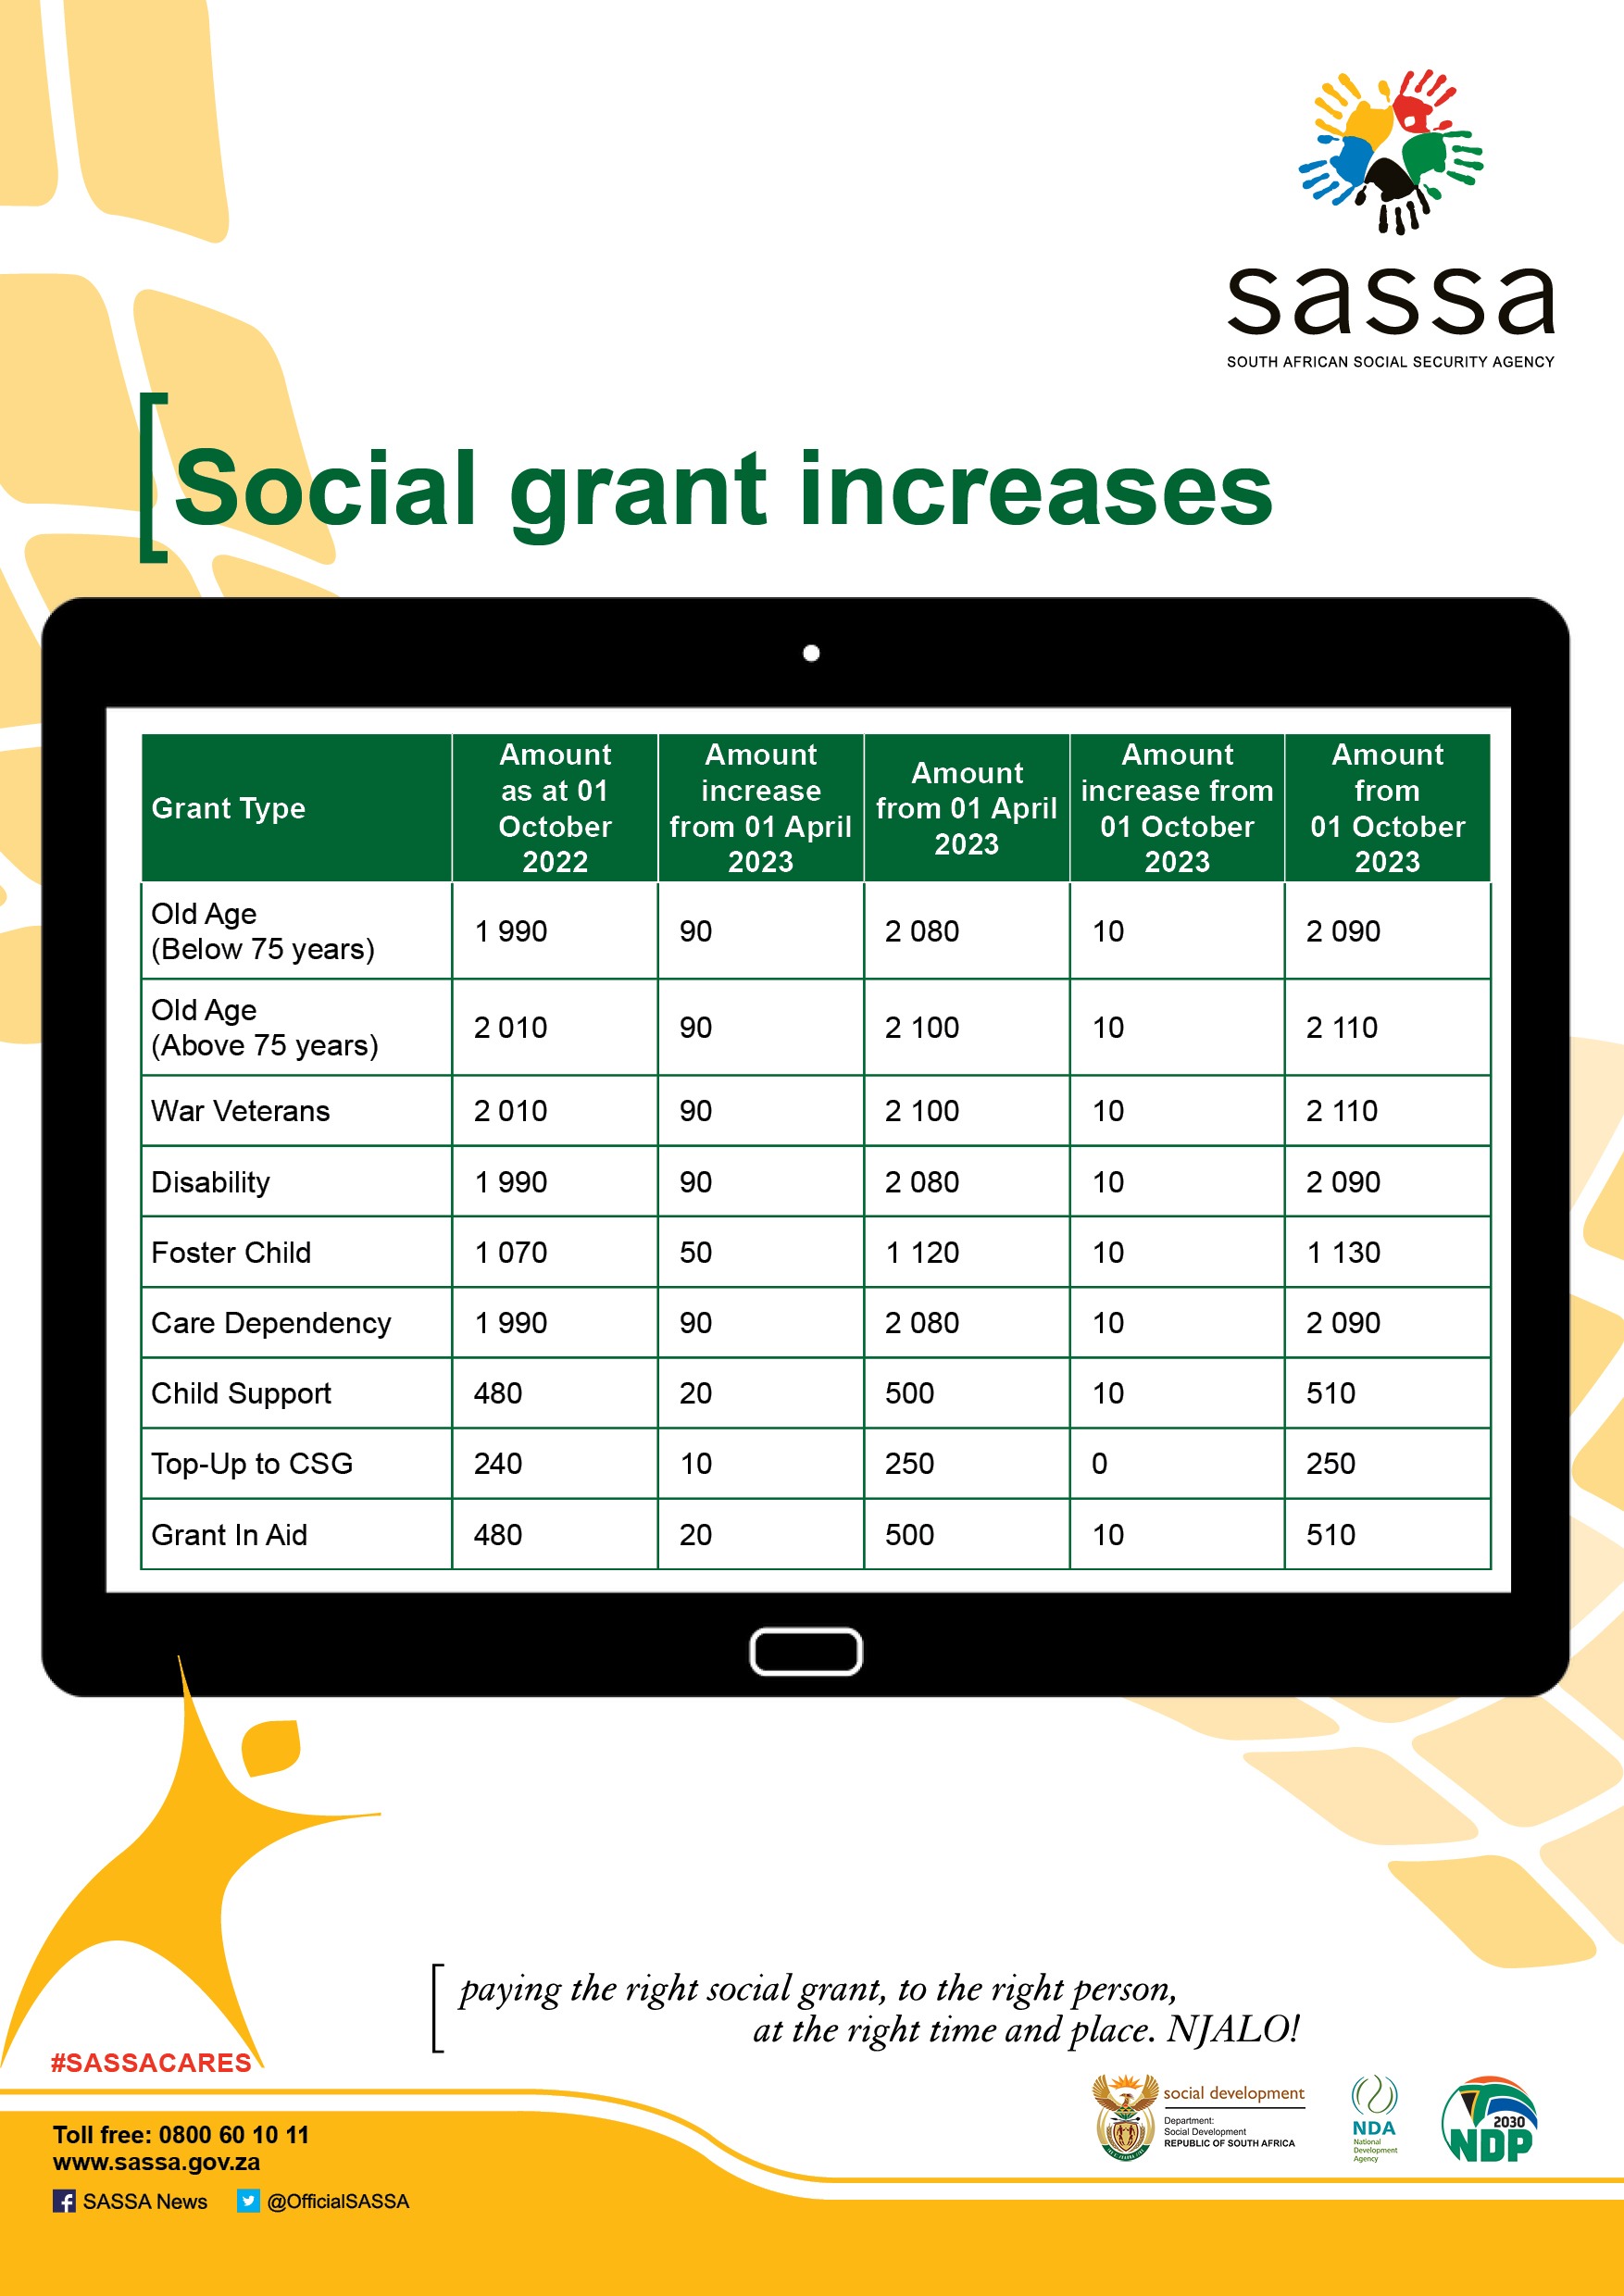 sassa grant increases for 2023 all grant types SASSA Social Grants